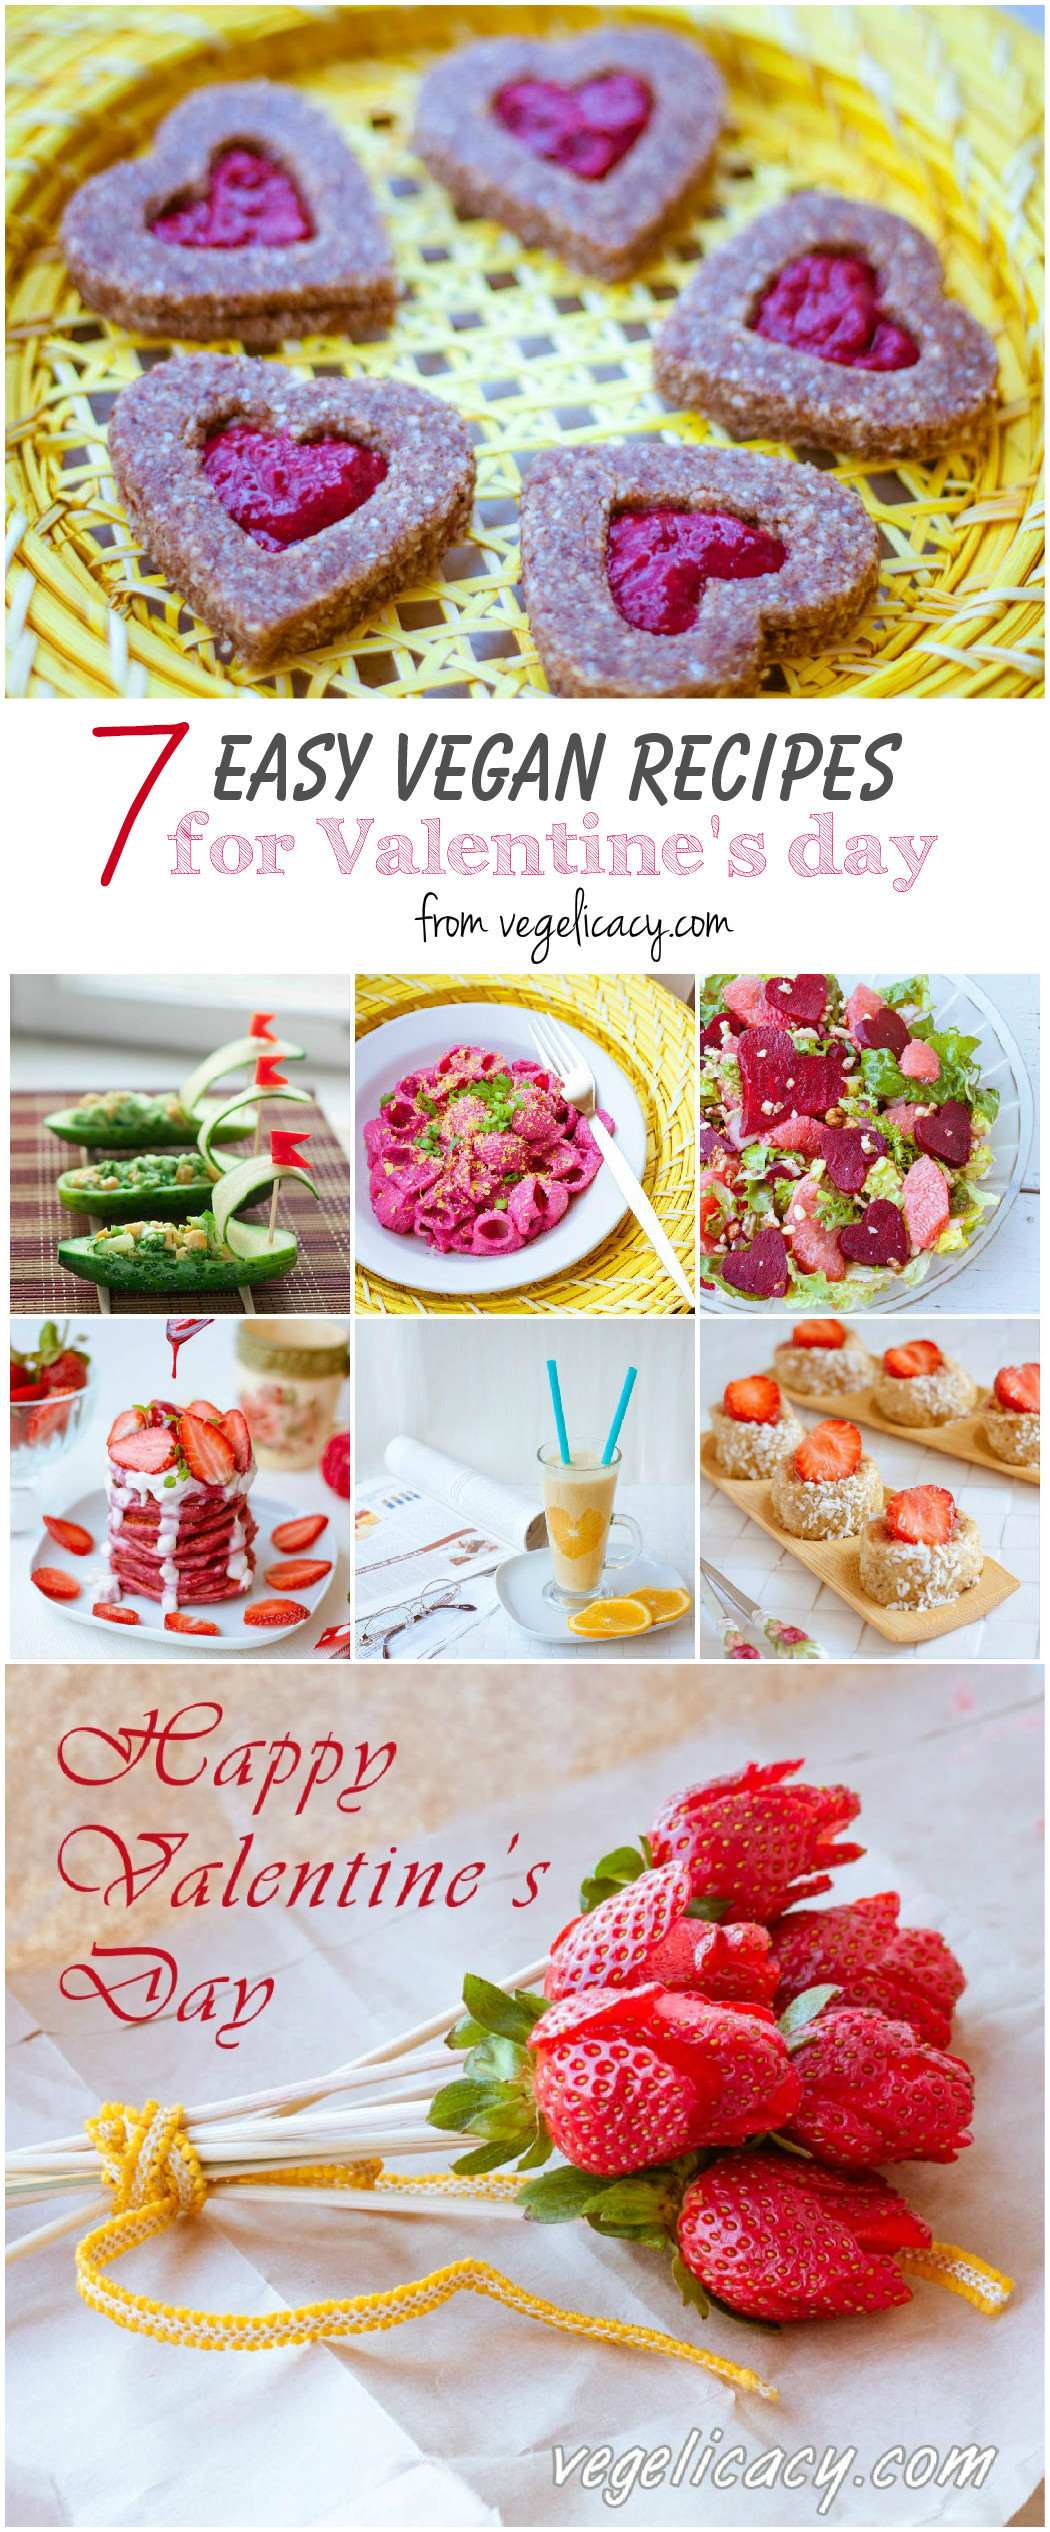 Vegetarian Valentines Recipes
 Top 7 easy vegan recipes for Valentine s day